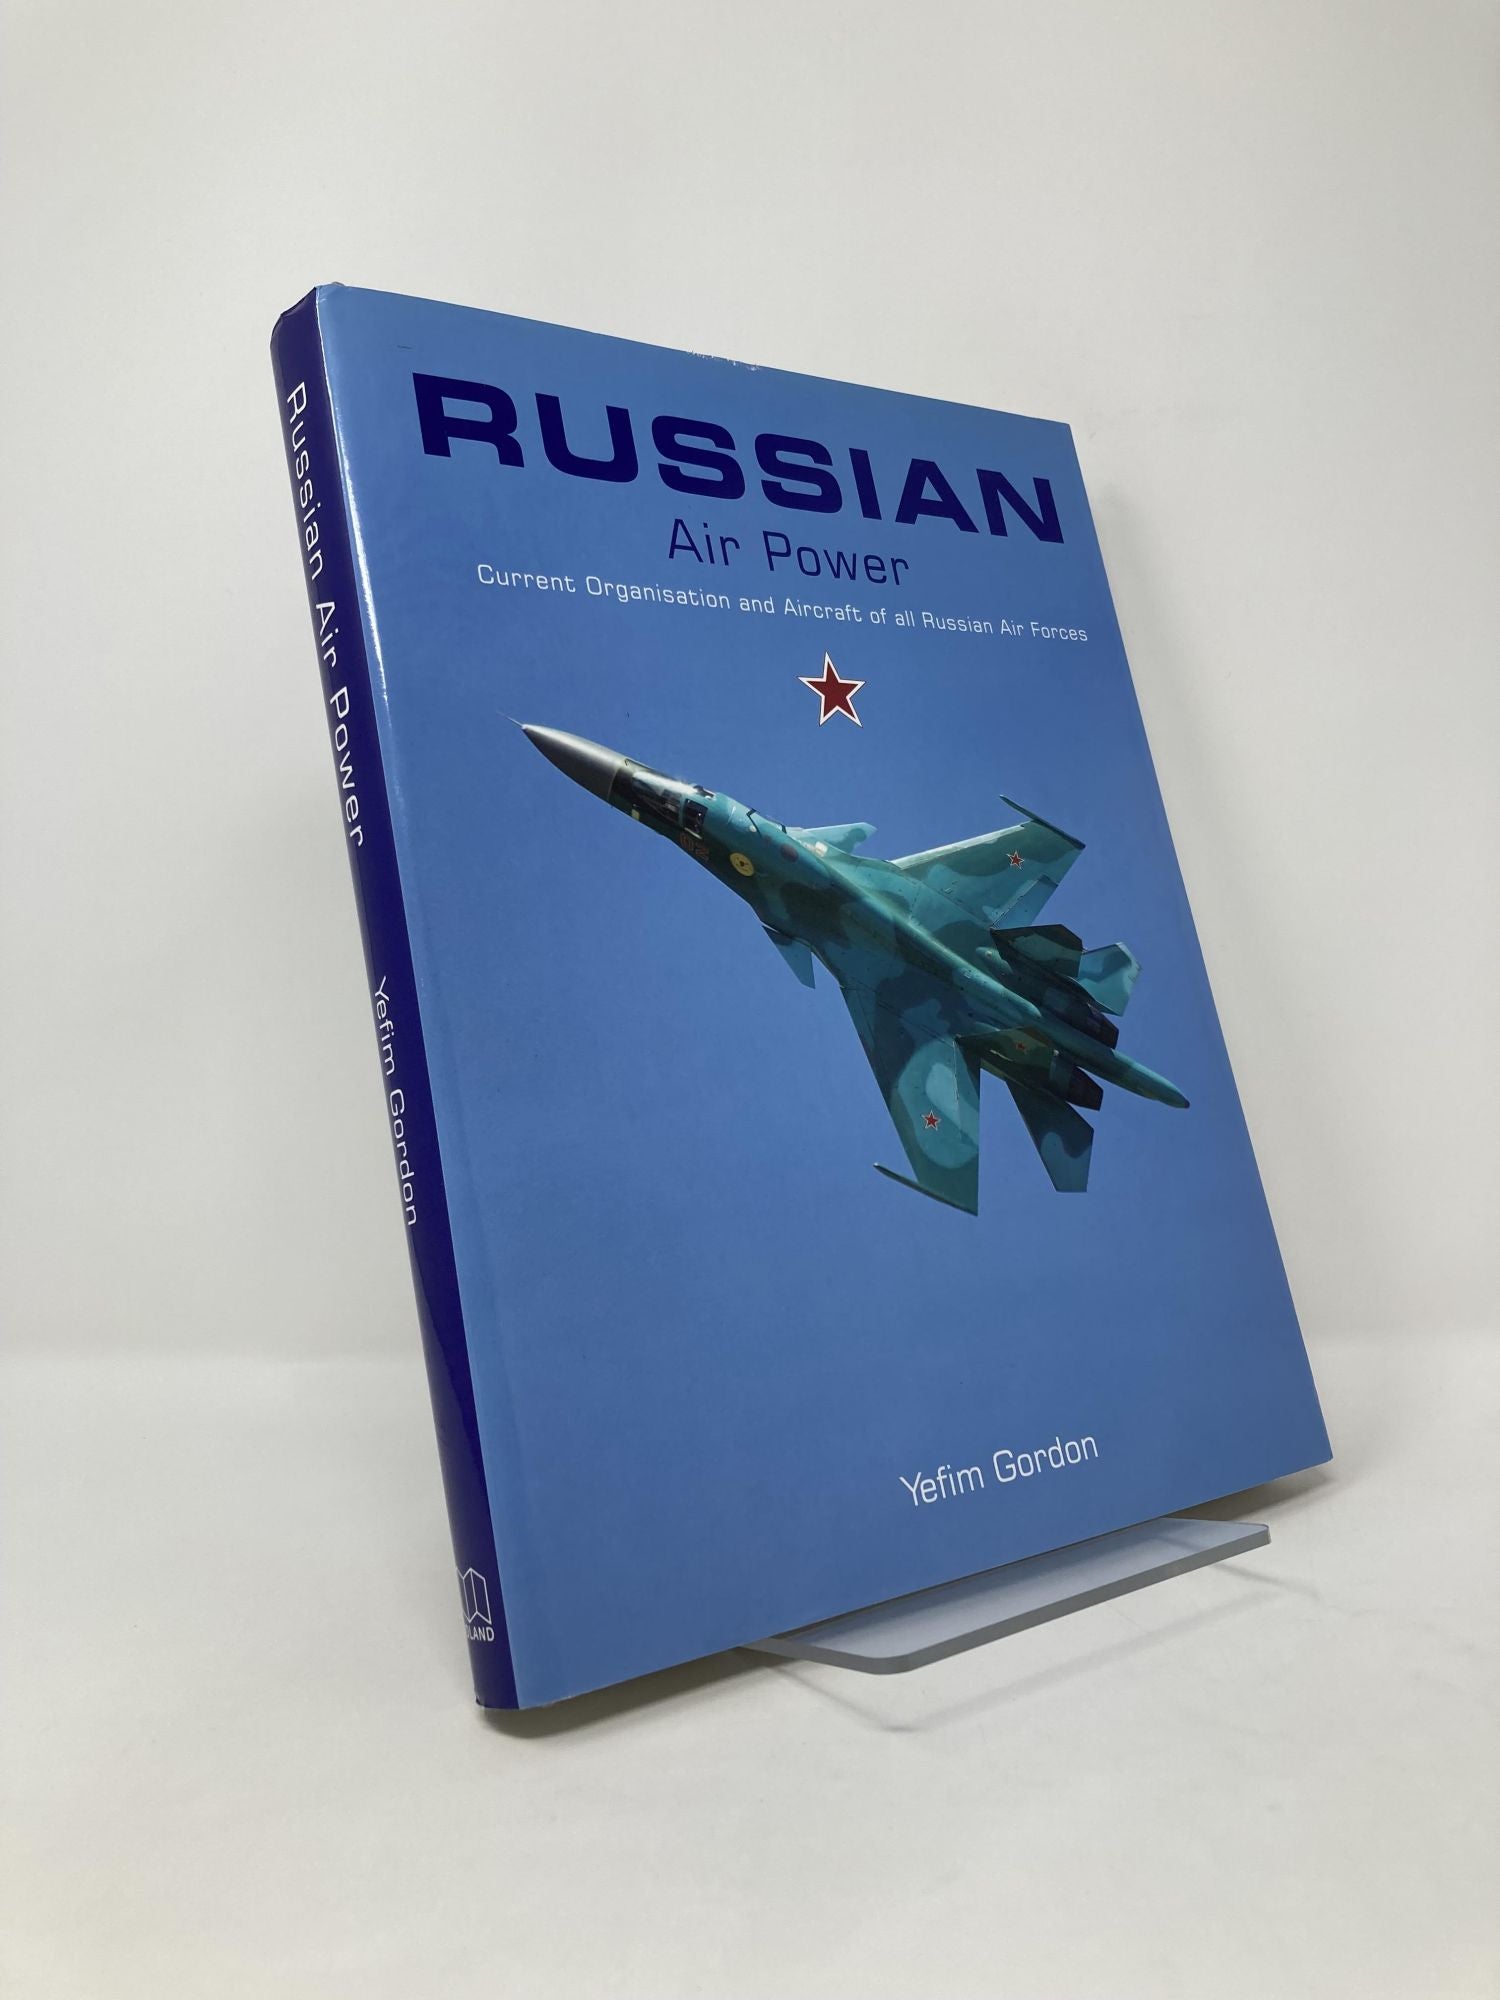 Russian Air Power by Yefim Gordon on Sag Harbor Books